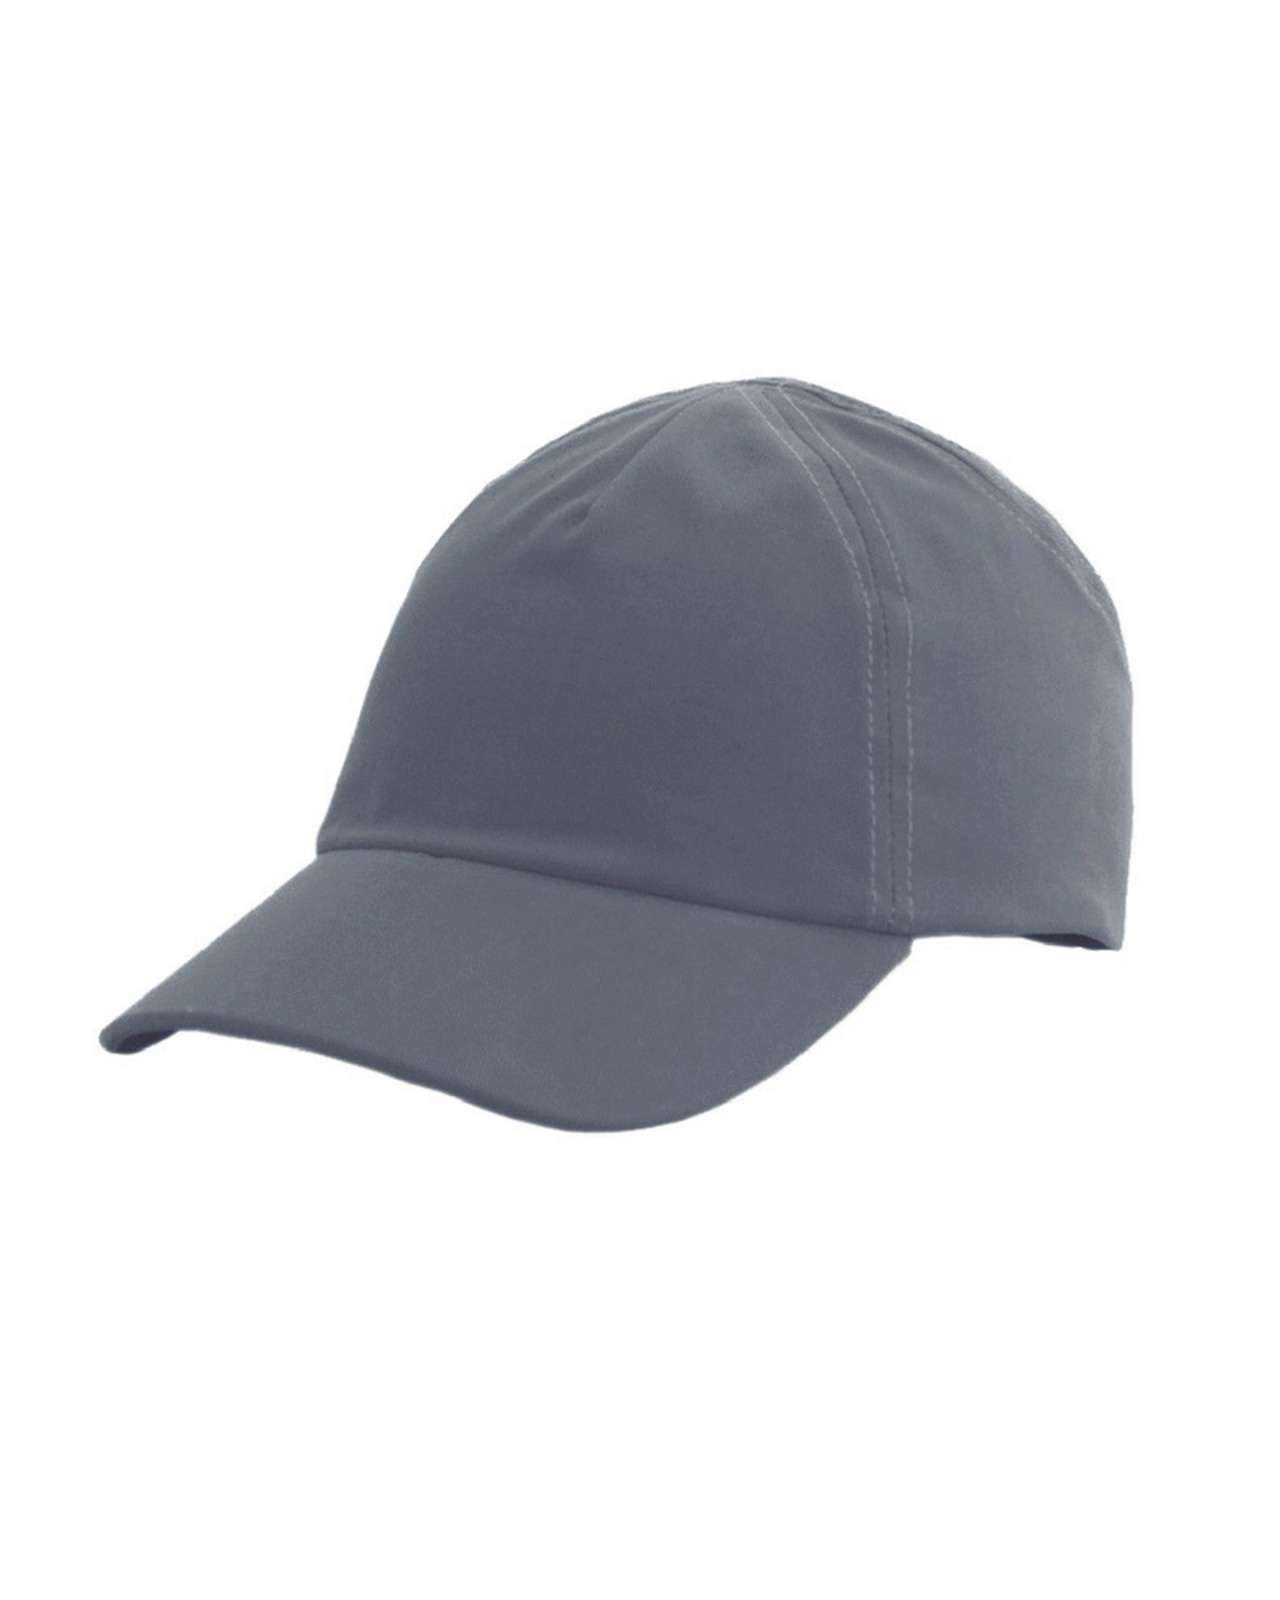 Каскетка защитная, т.серый, RZ FavoriT CAP 95510